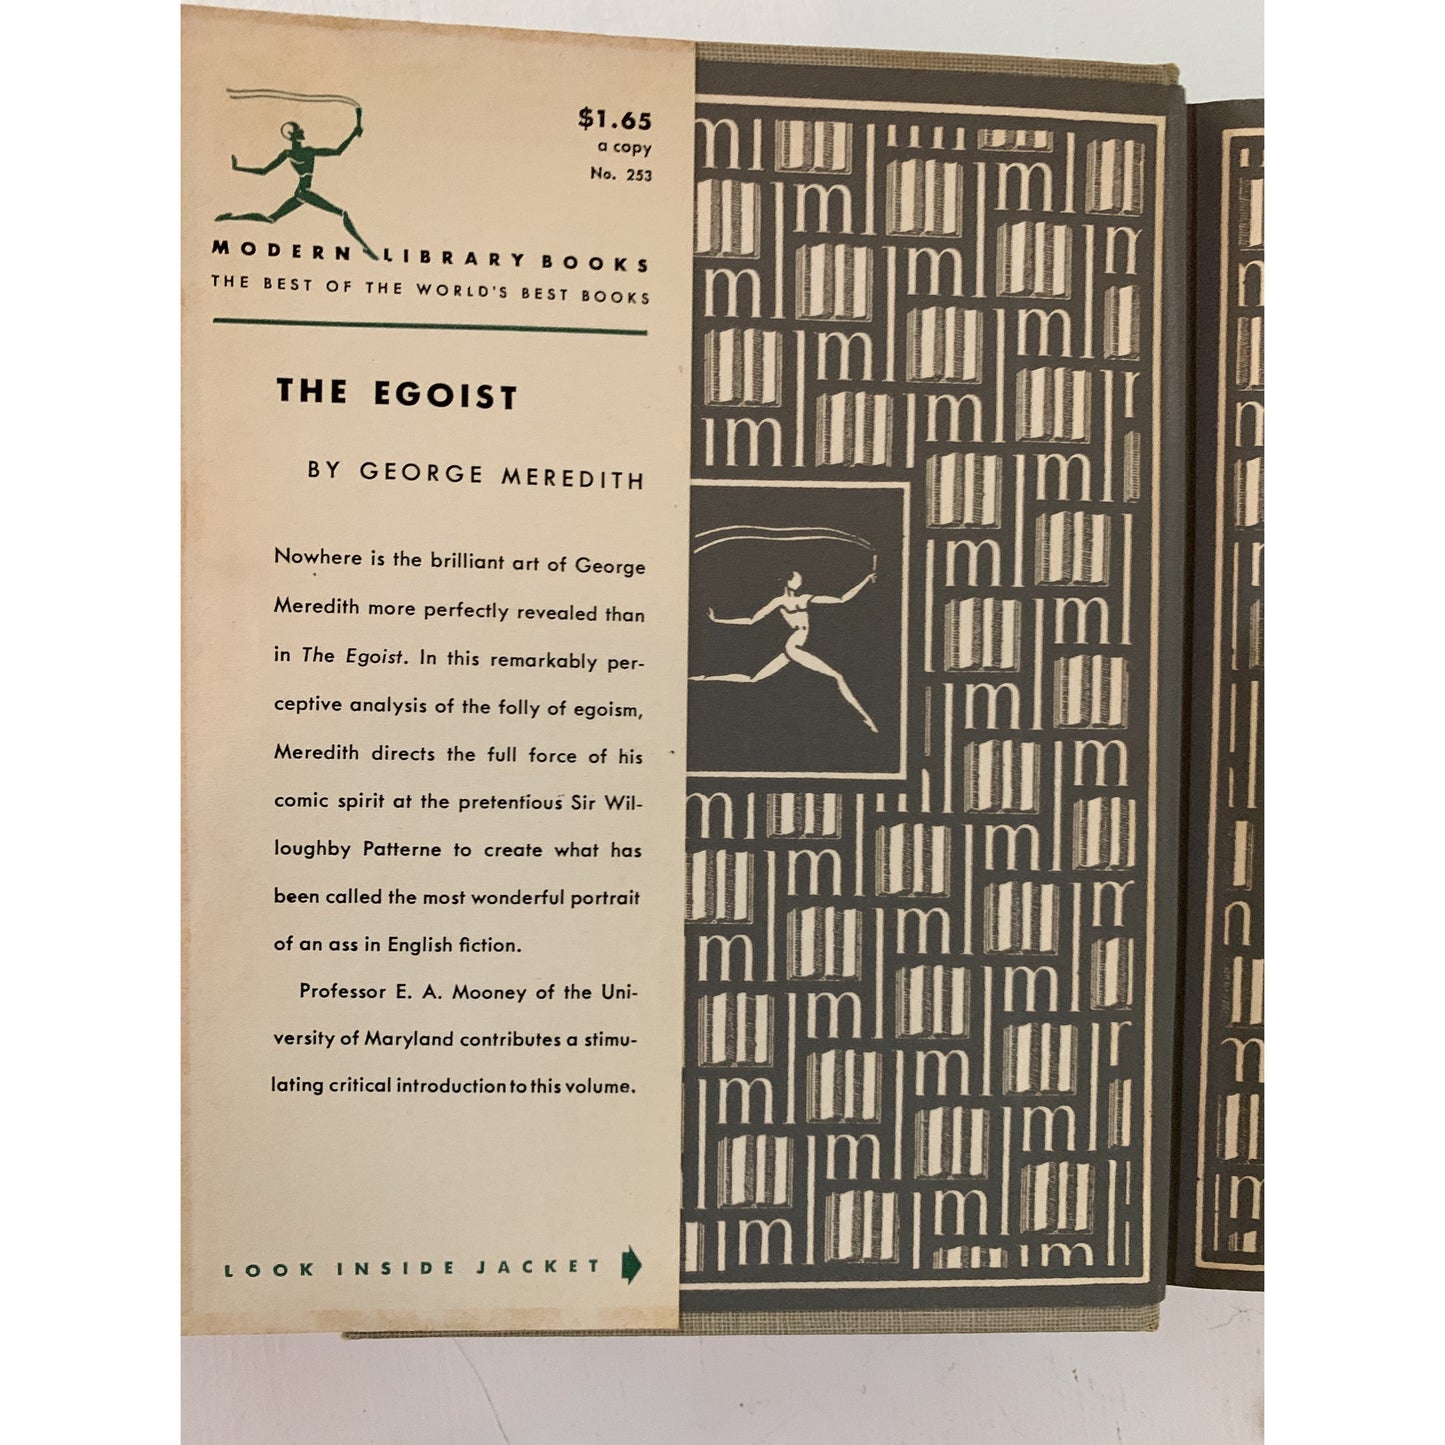 The Egoist, George Meredith, Modern Library, Hardcover 1951